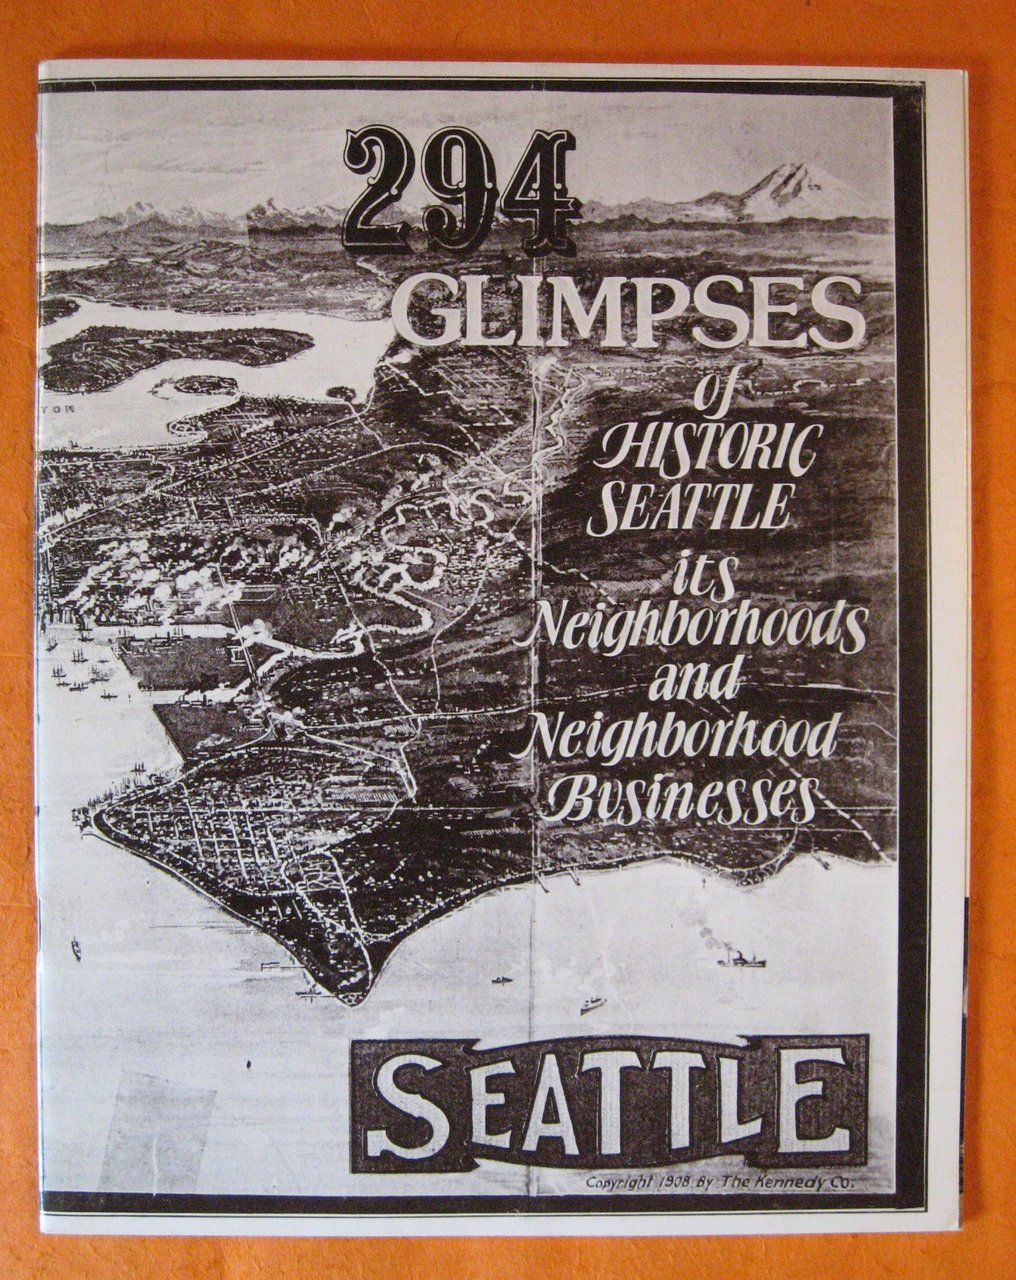 294 Glimpses of Historic Seattle, Its Neighborhoods and Neighborhood Businesses